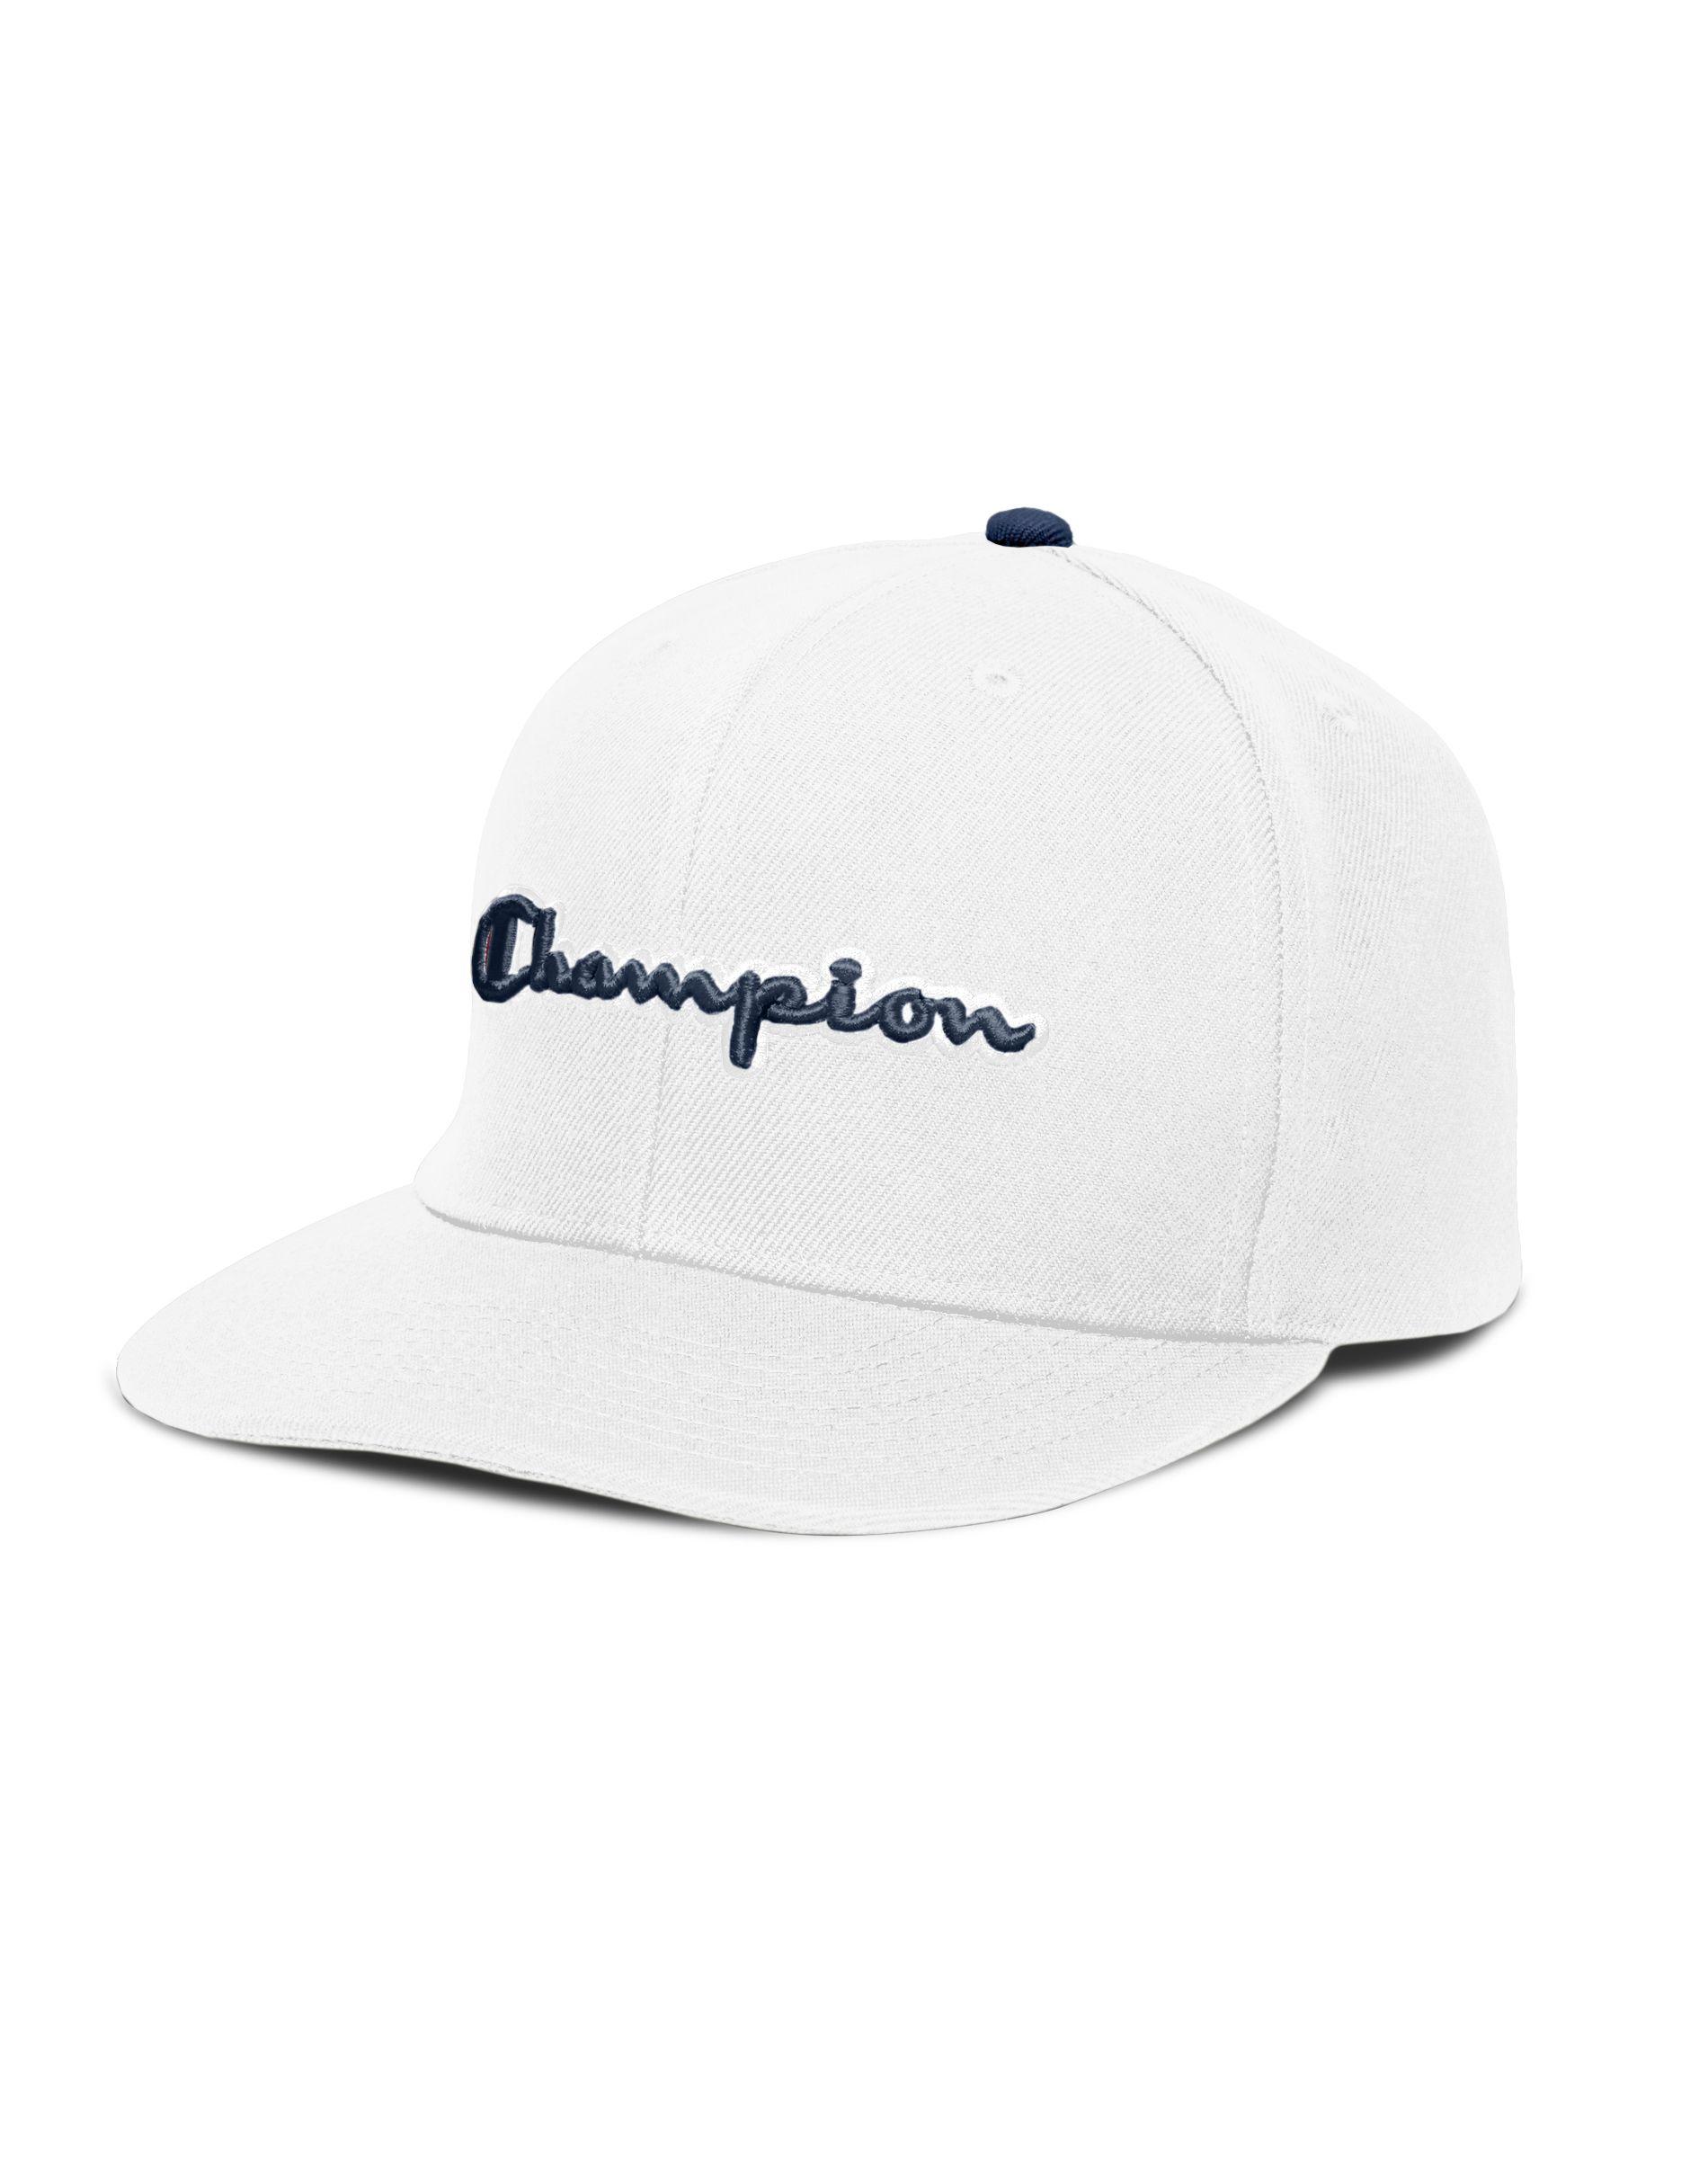 white champion baseball cap